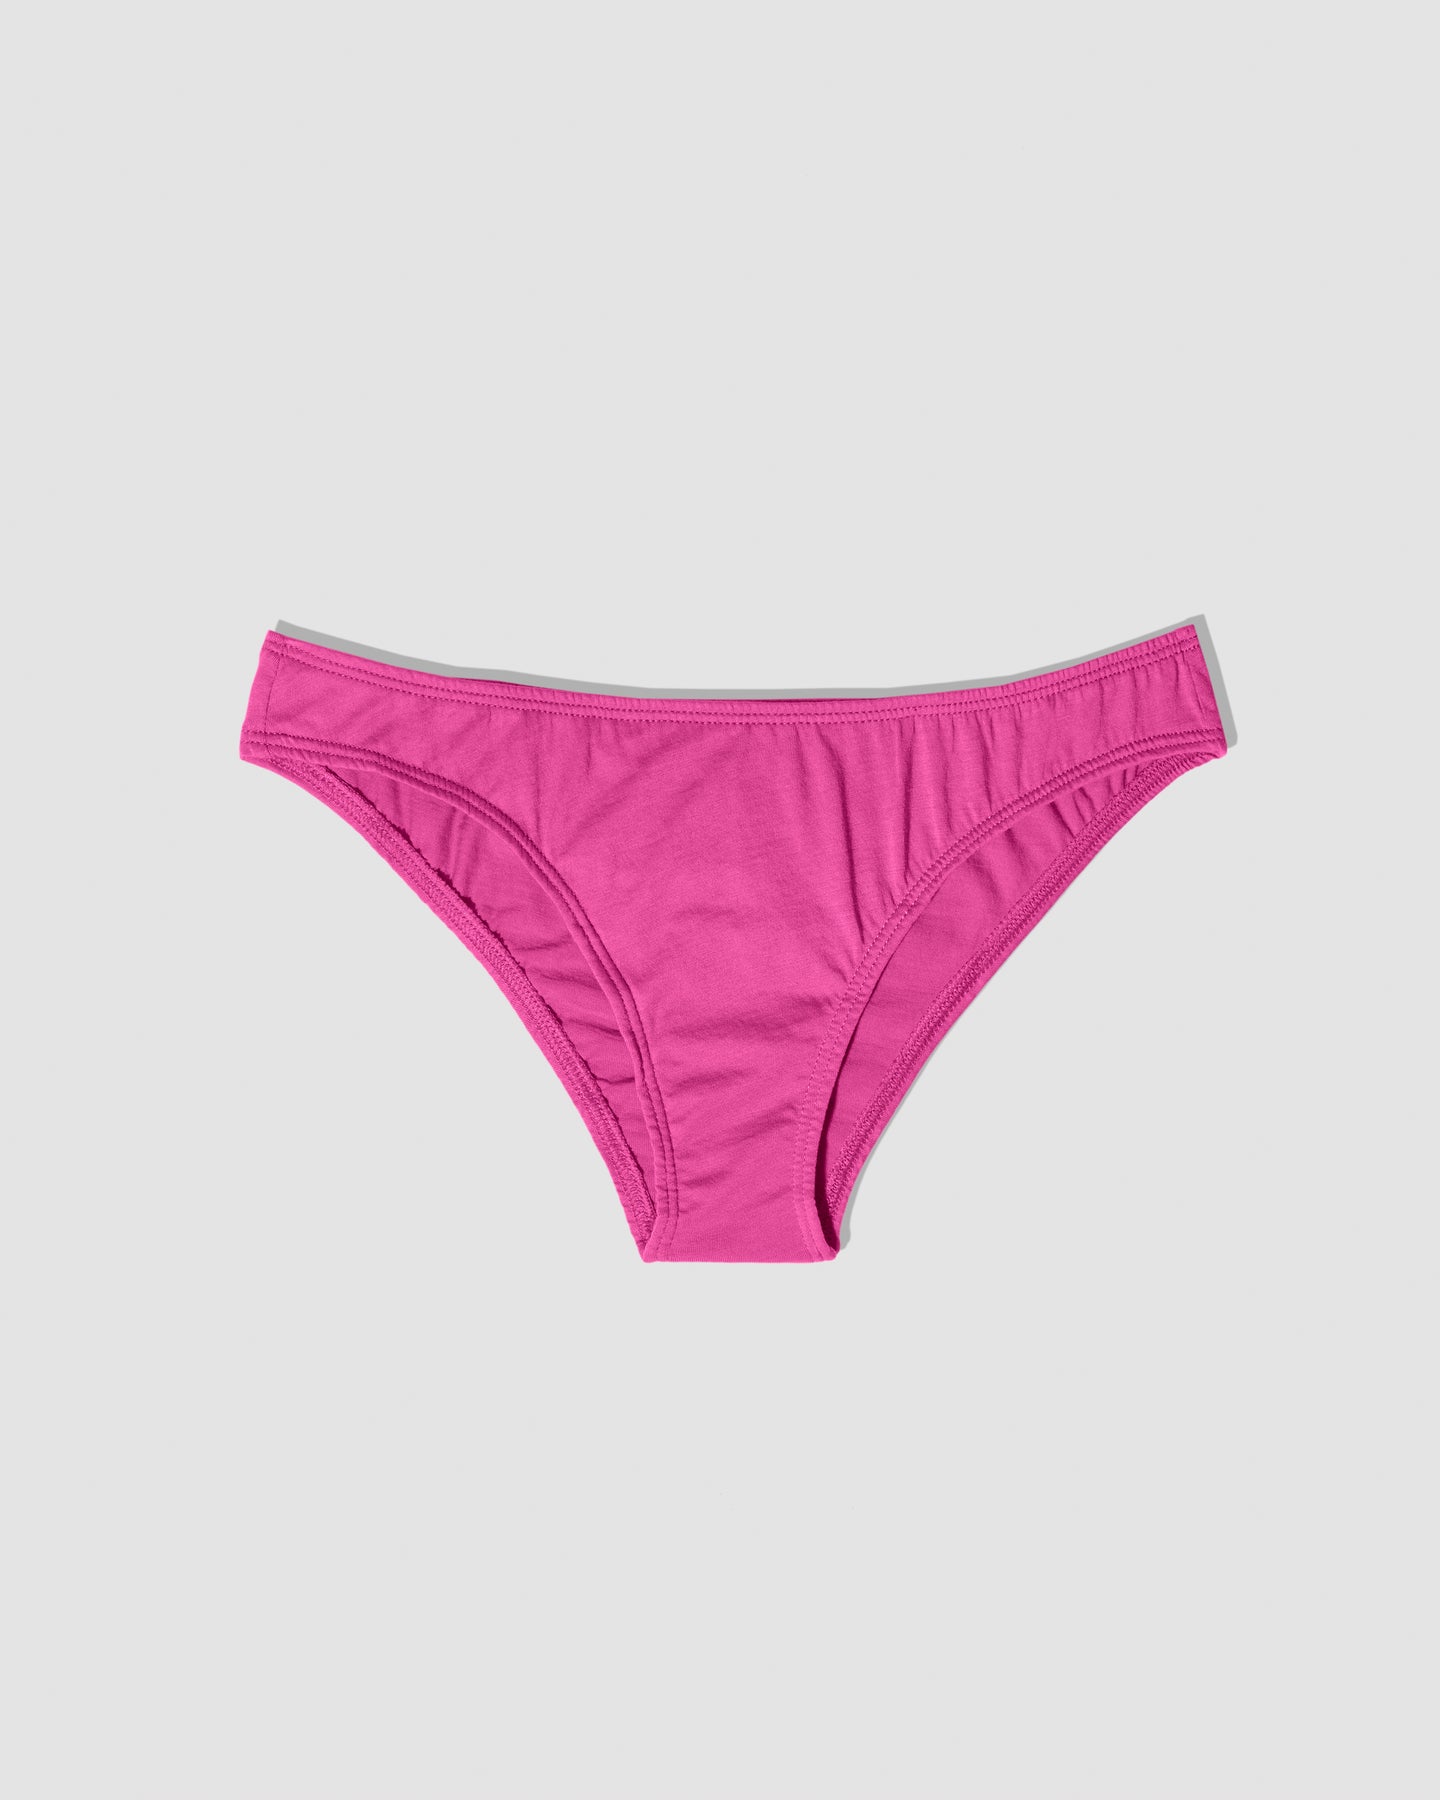 Qoo10 - Beauty Panties C02288 - 100% Cotton/ Underwear/ Lingerie